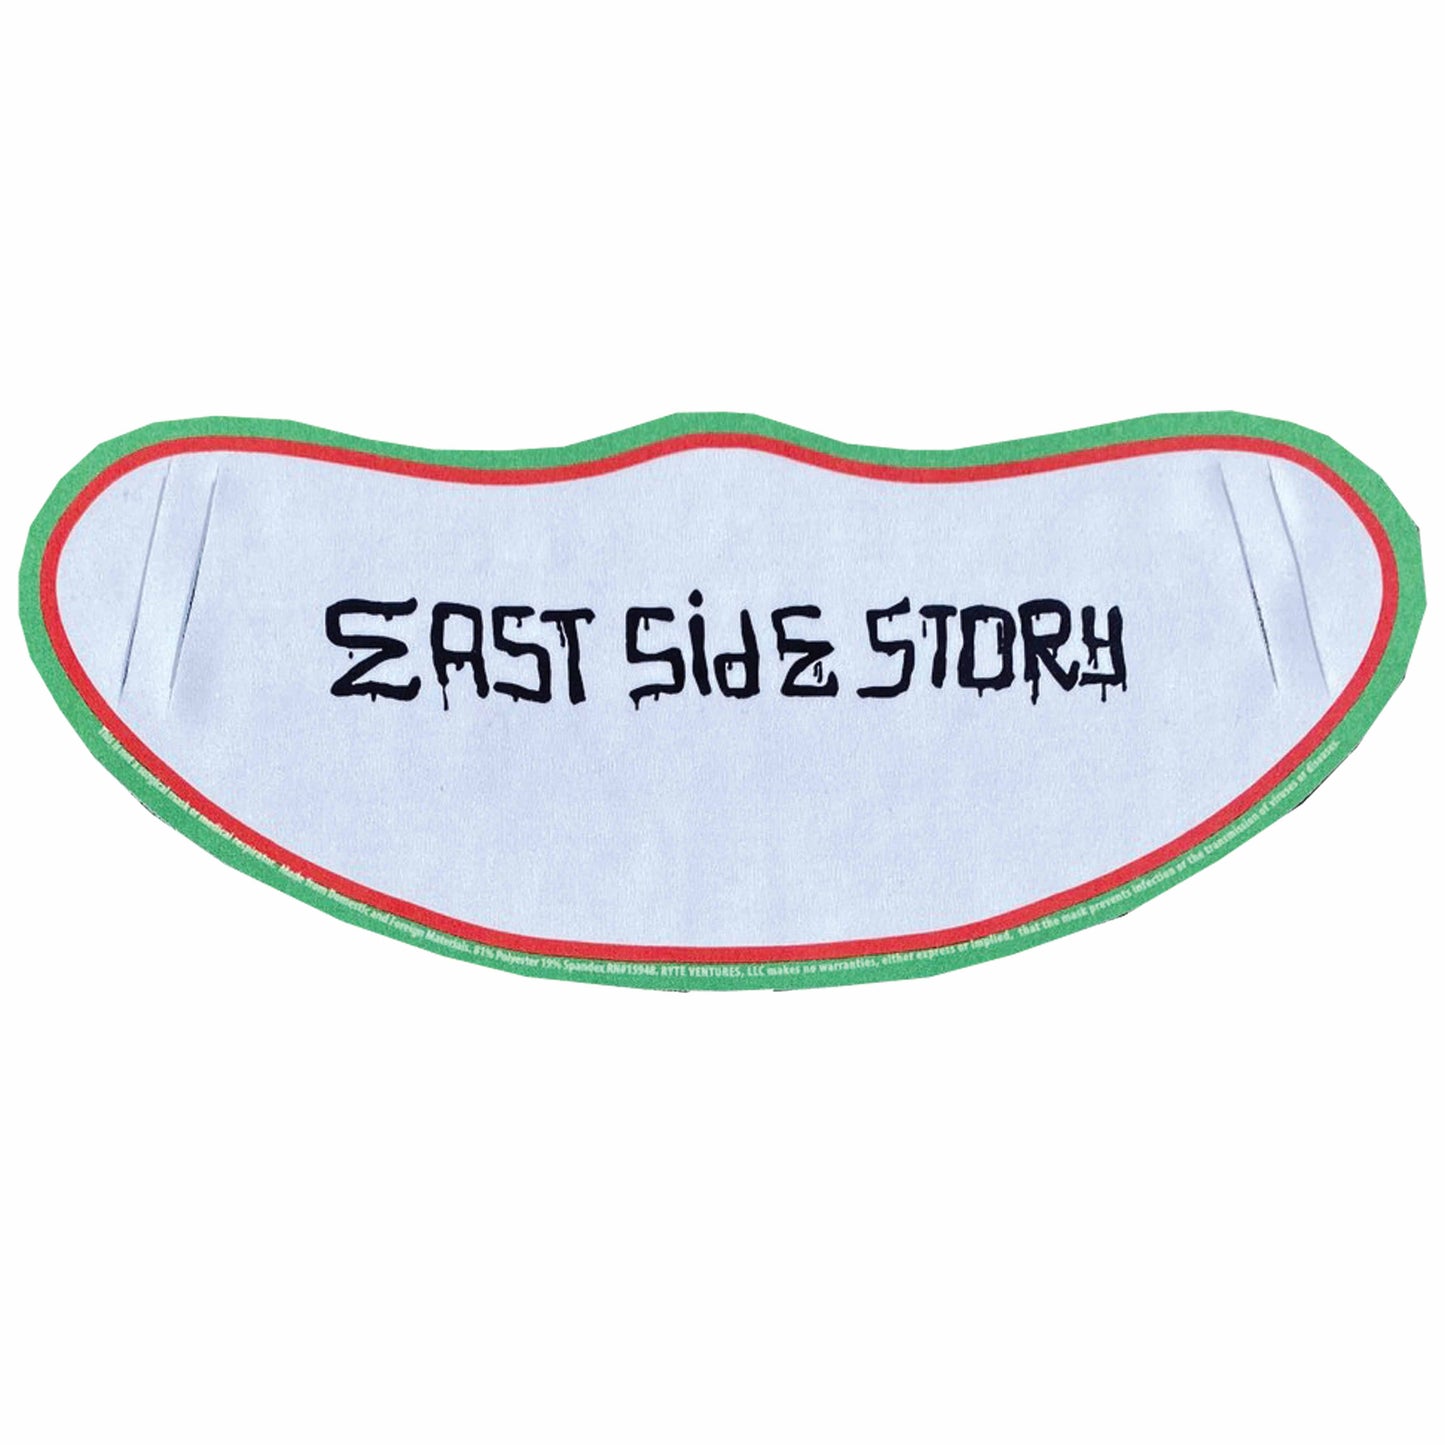 East Side Story Mask